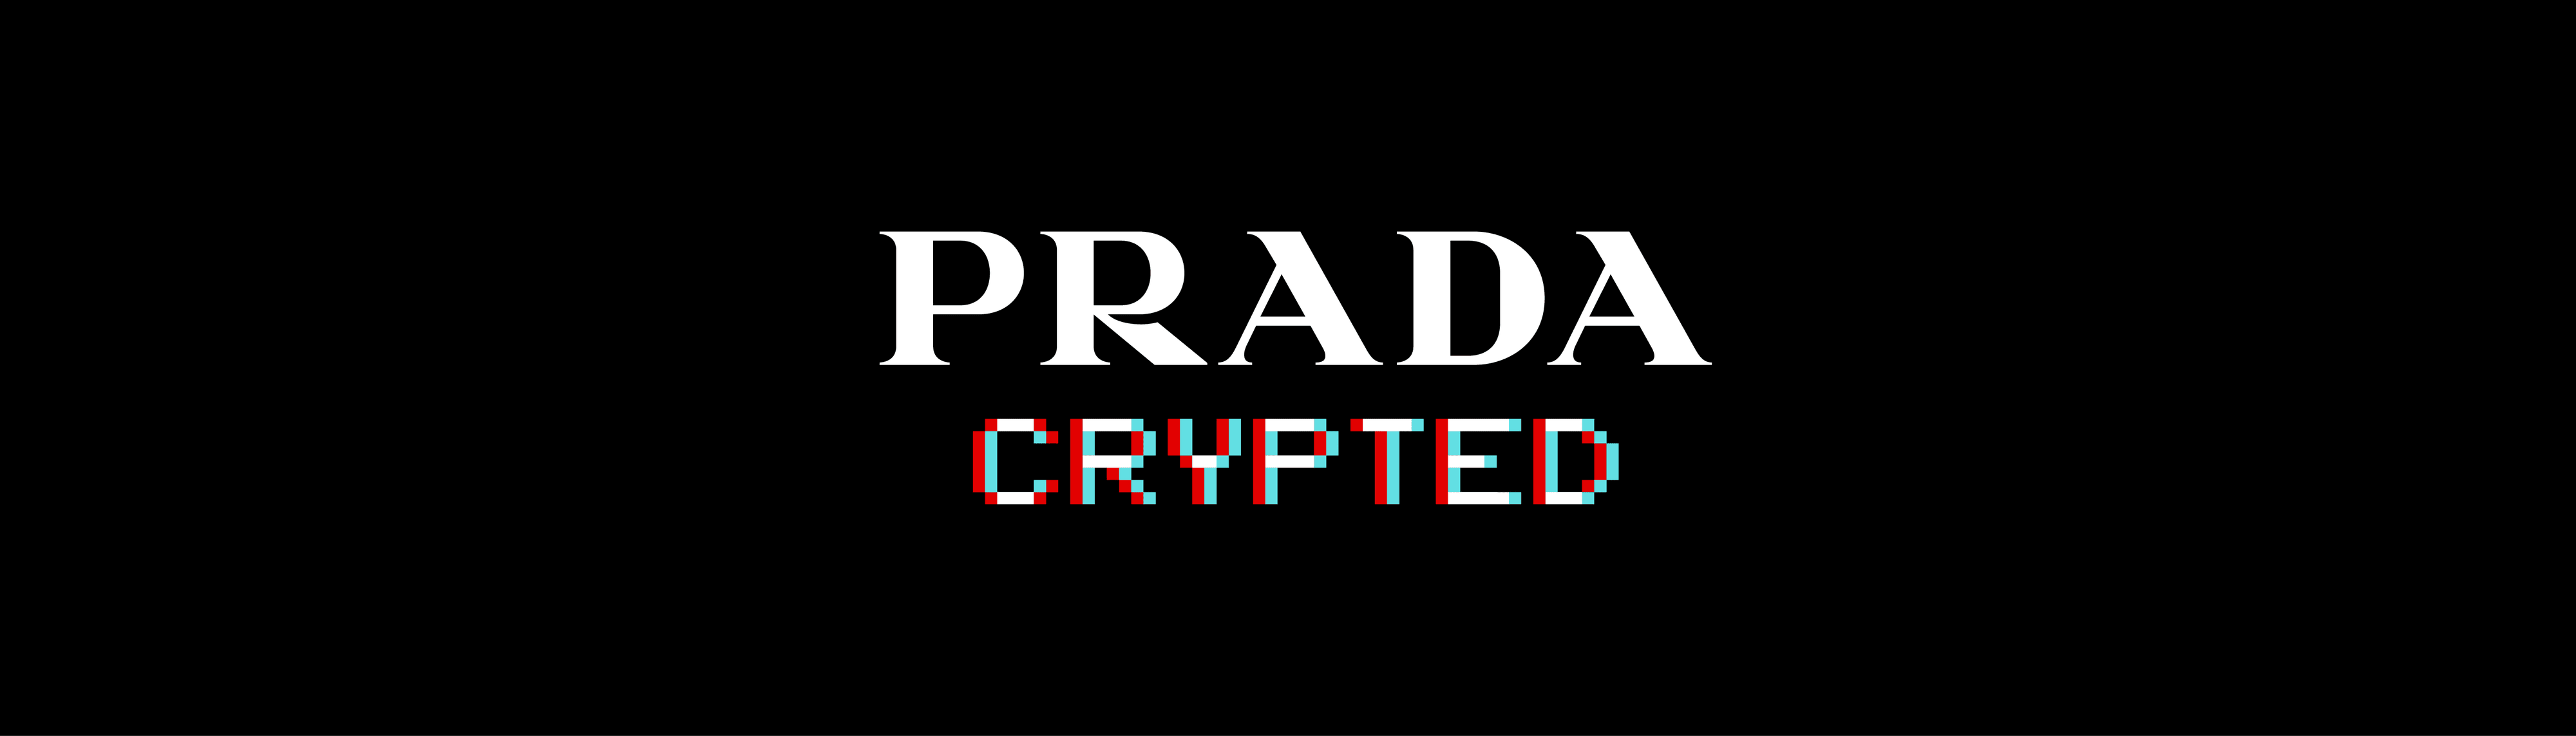 Prada-Crypted 横幅